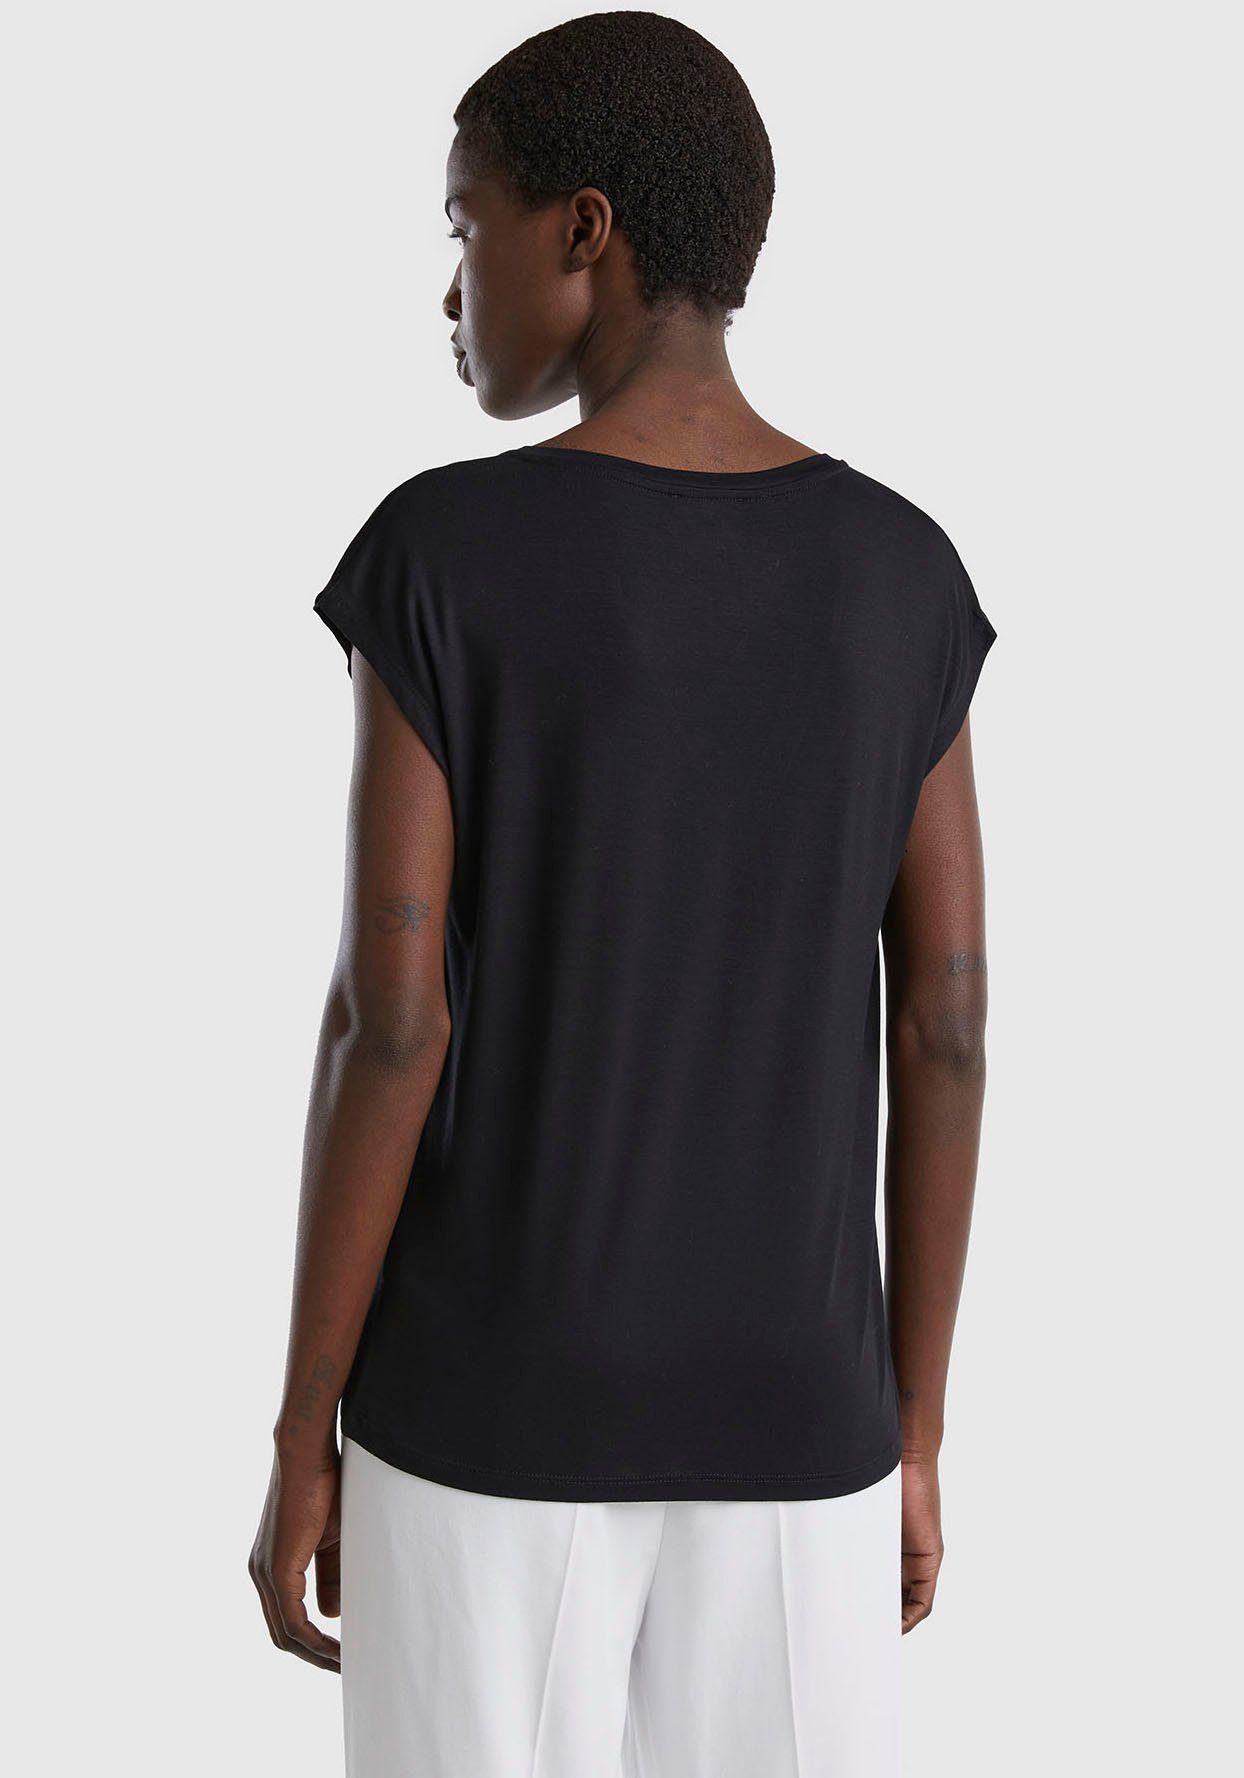 United Colors of Benetton schwarz Passform lässiger in T-SHIRT V-Shirt